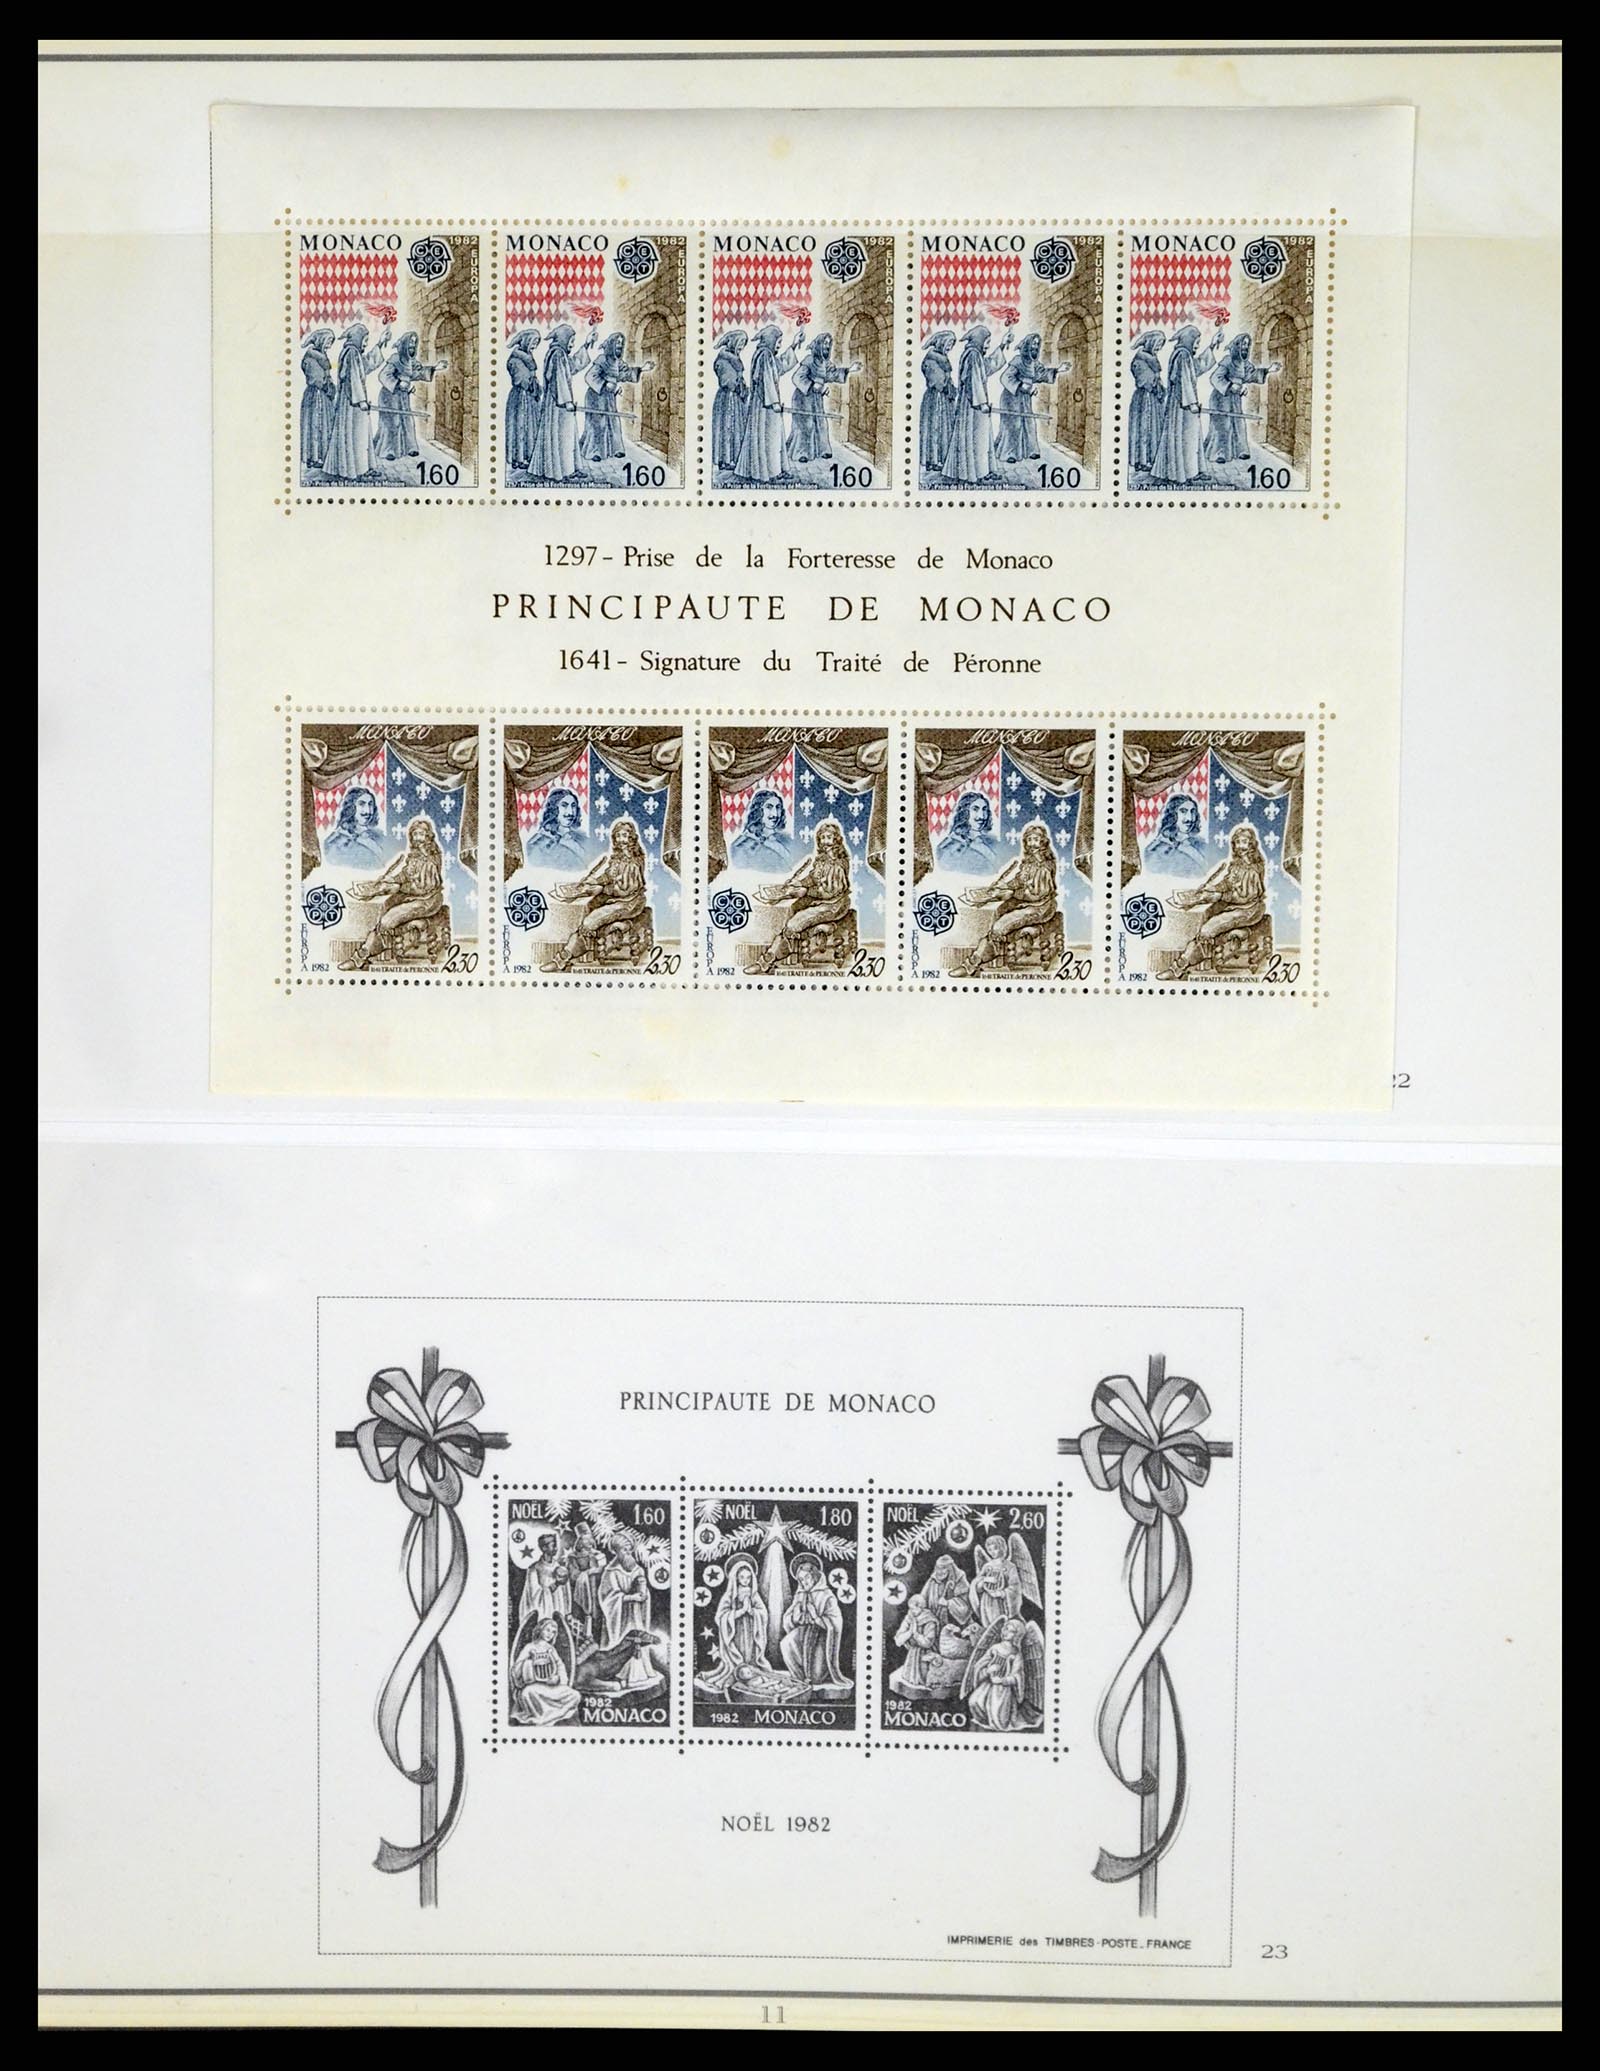 37437 182 - Stamp collection 37437 Monaco 1885-1996.